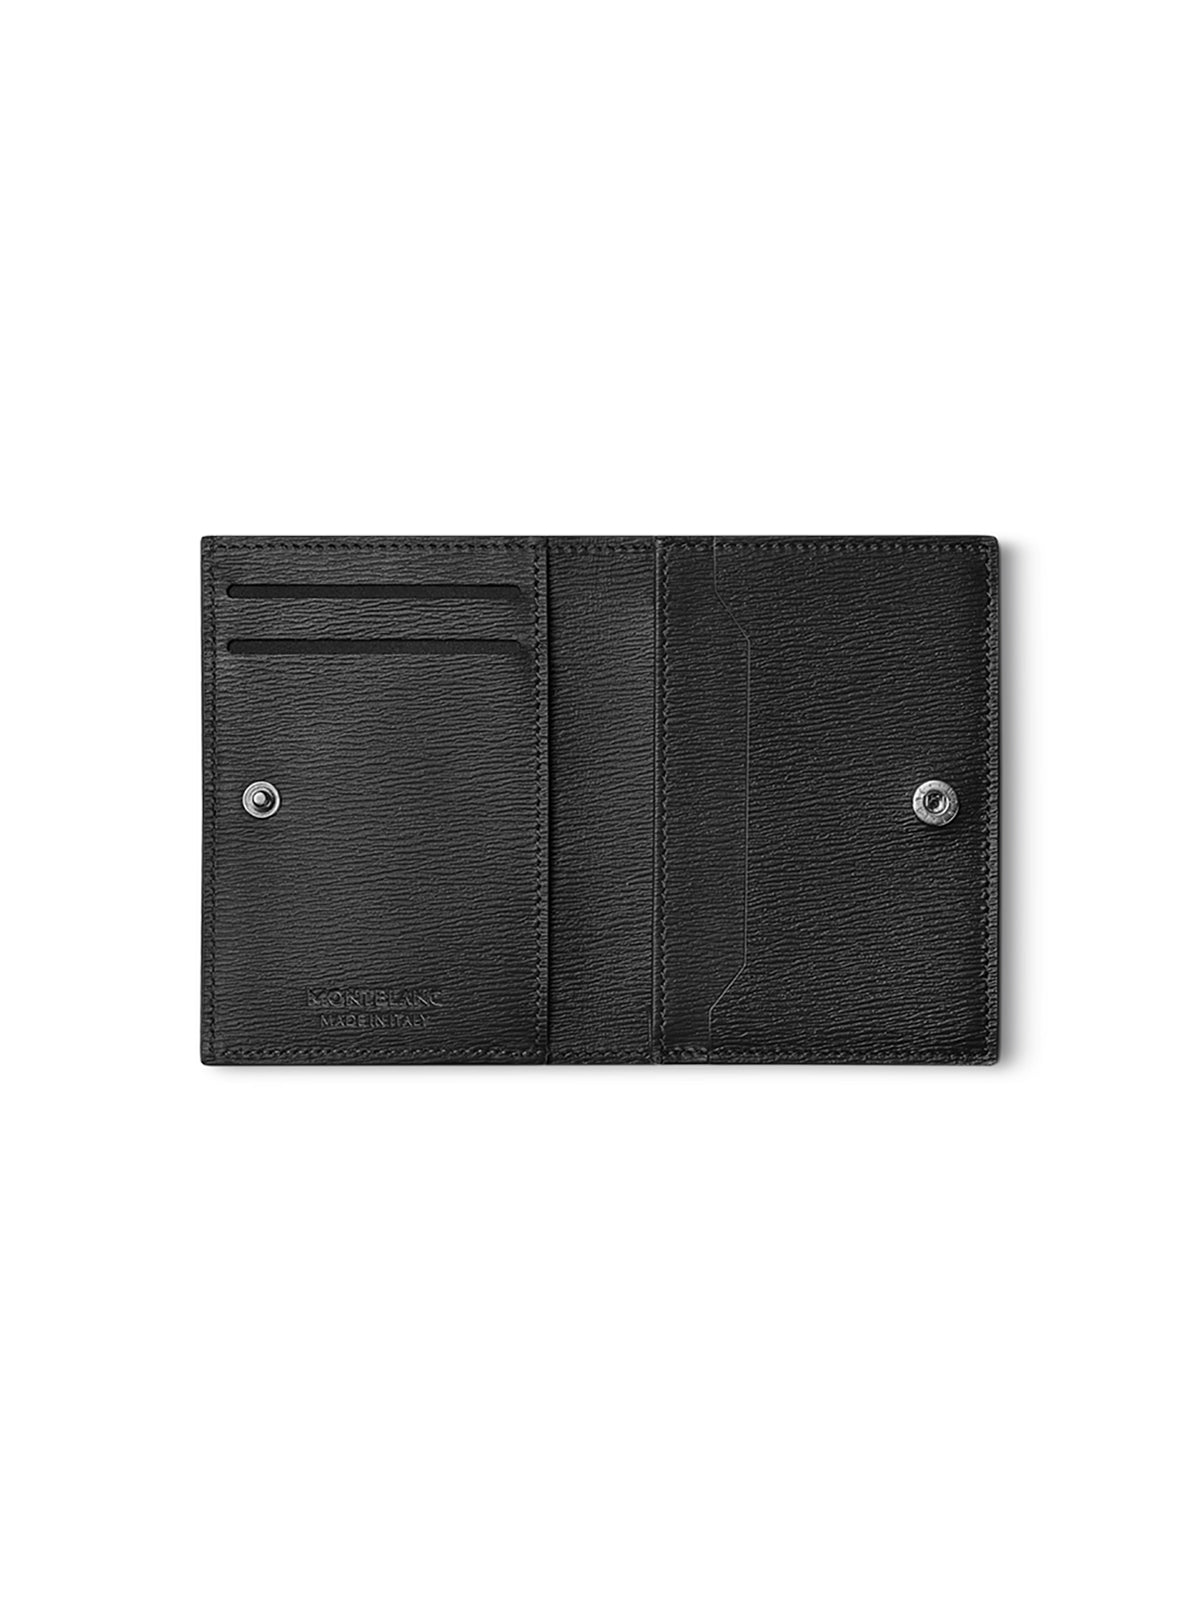 Montblanc Meisterstuck Black Leather Business Card Holder MB129251